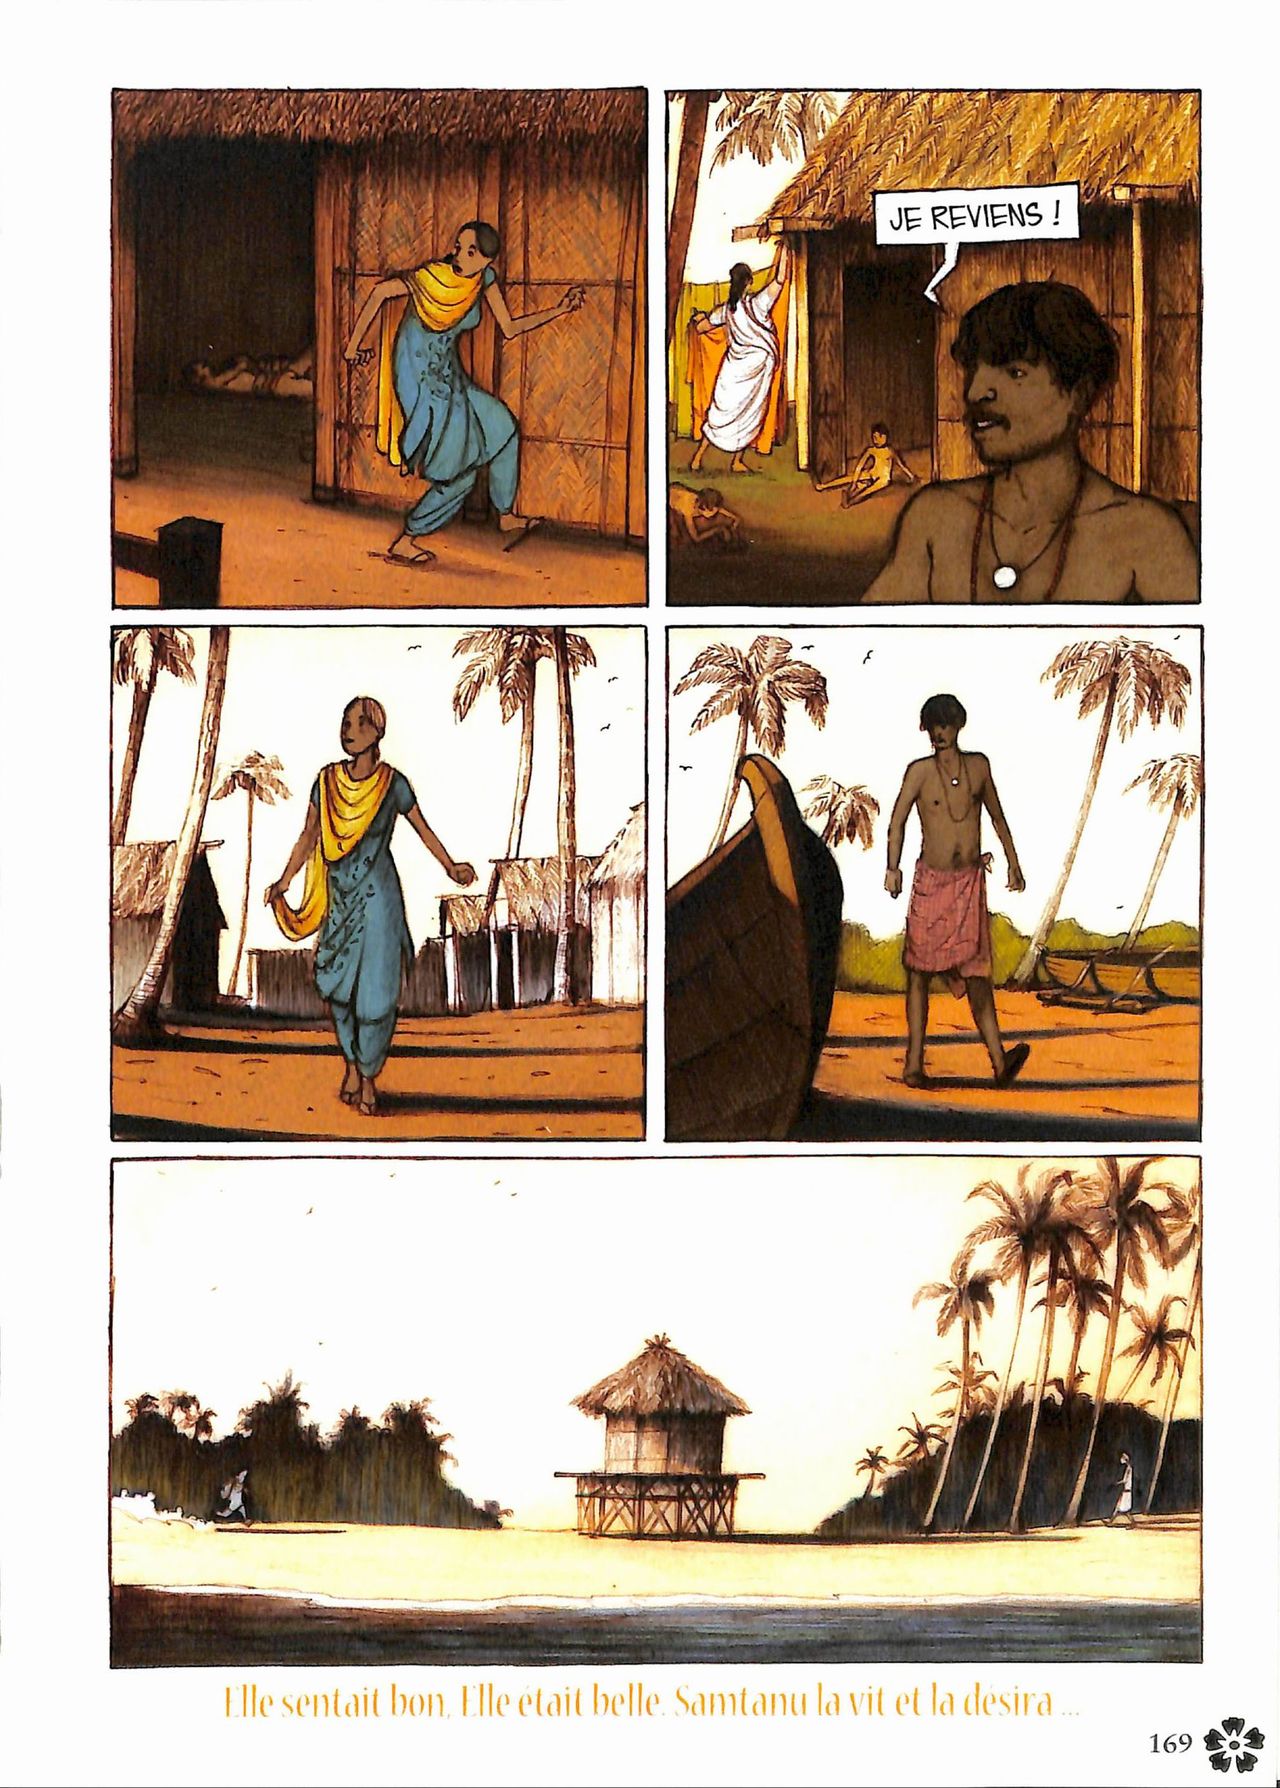 Kama Sutra en bandes dessinées - Kama Sutra with Comics numero d'image 169